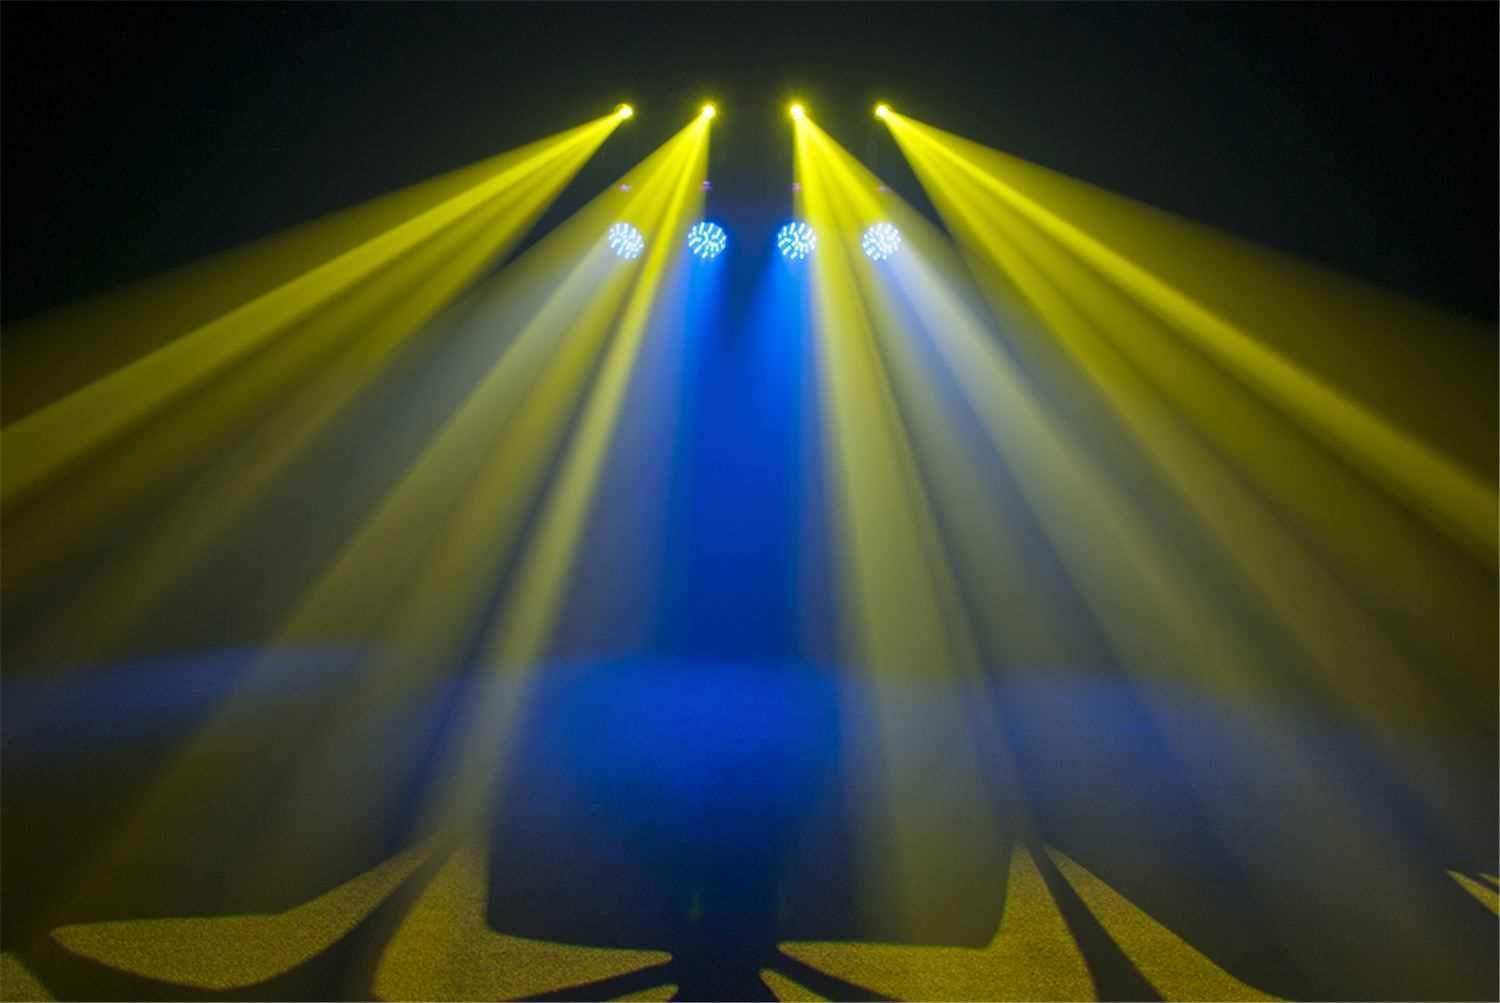 Chauvet 4Bar Flex RGB LED Wash Light System - ProSound and Stage Lighting